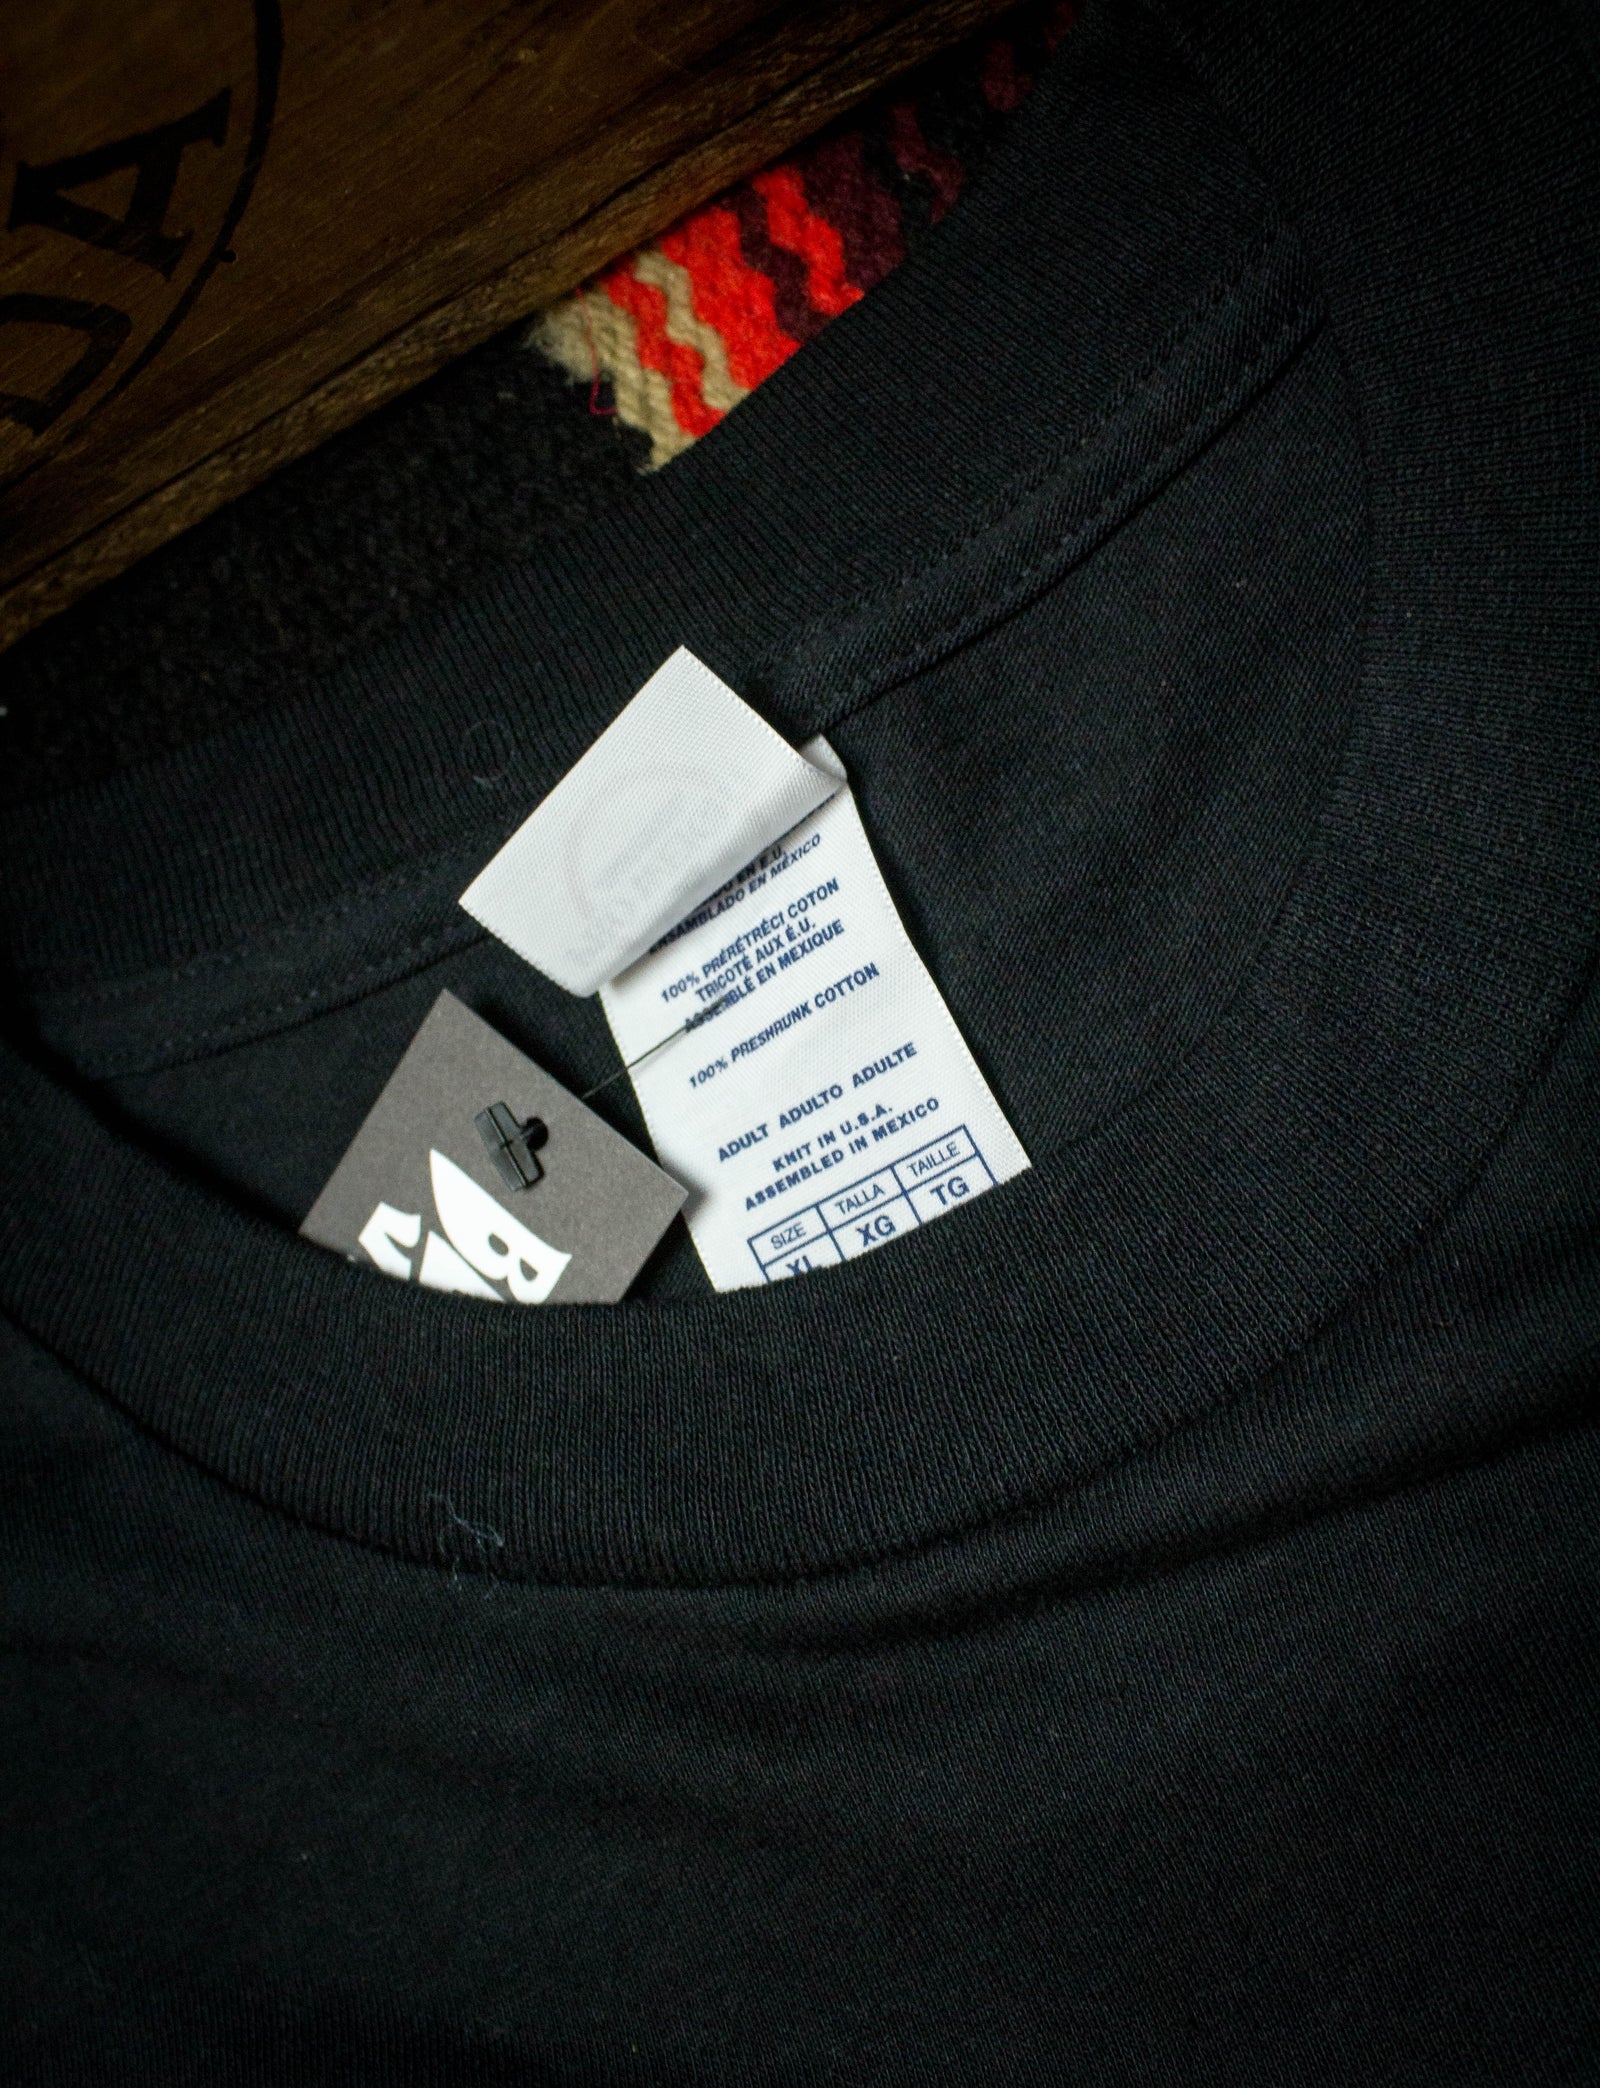 2005 Iron Maiden Death on The Road World Tour Black Concert T Shirt Unisex XL